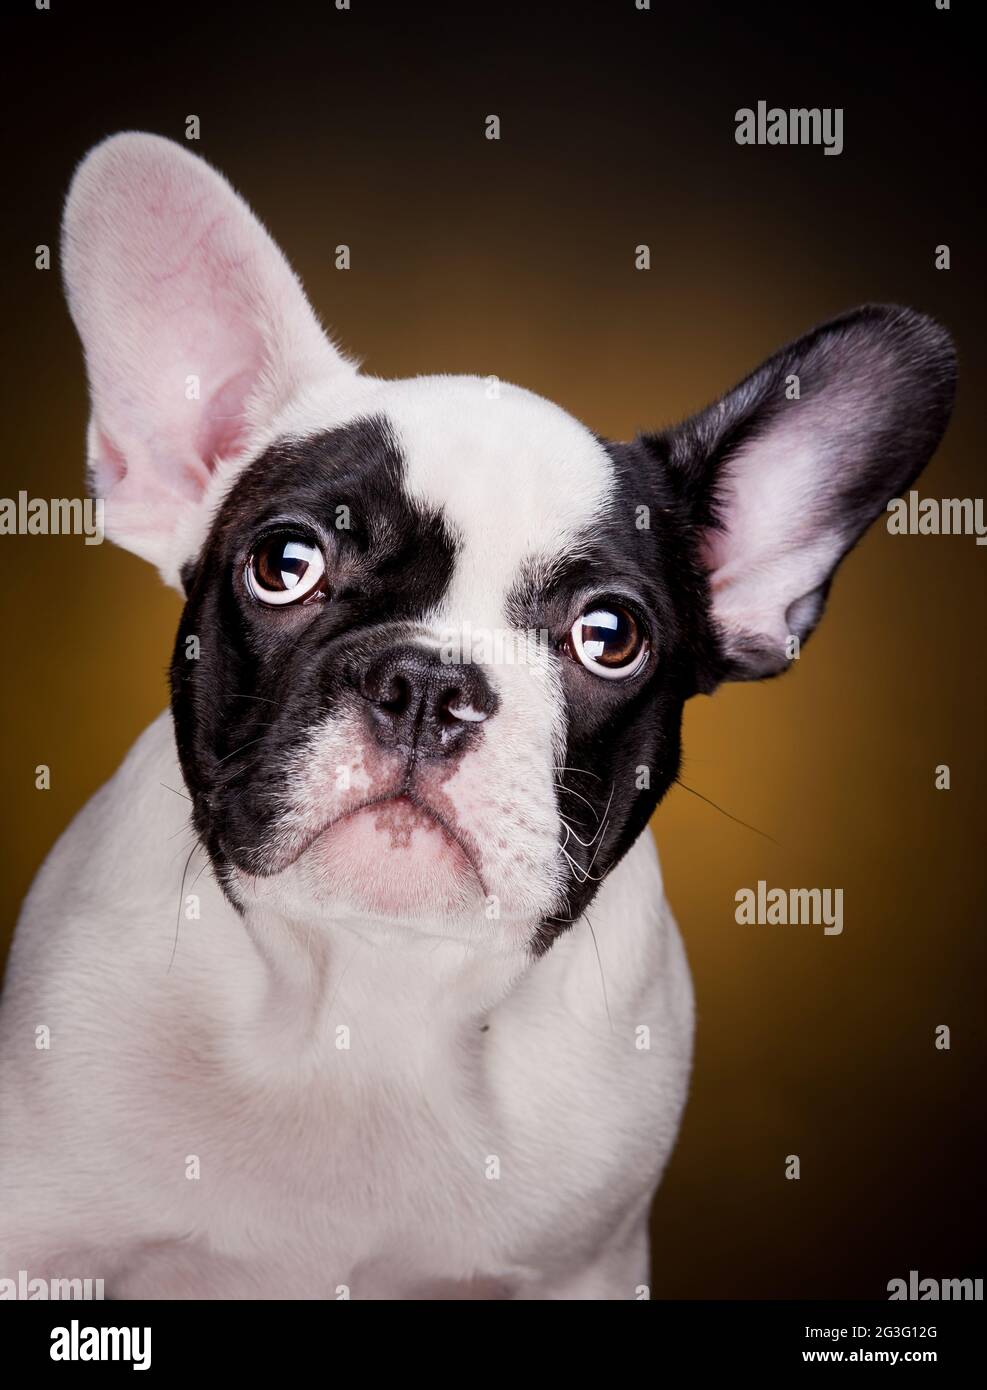 Funny french bulldog puppy Stock Photo - Alamy